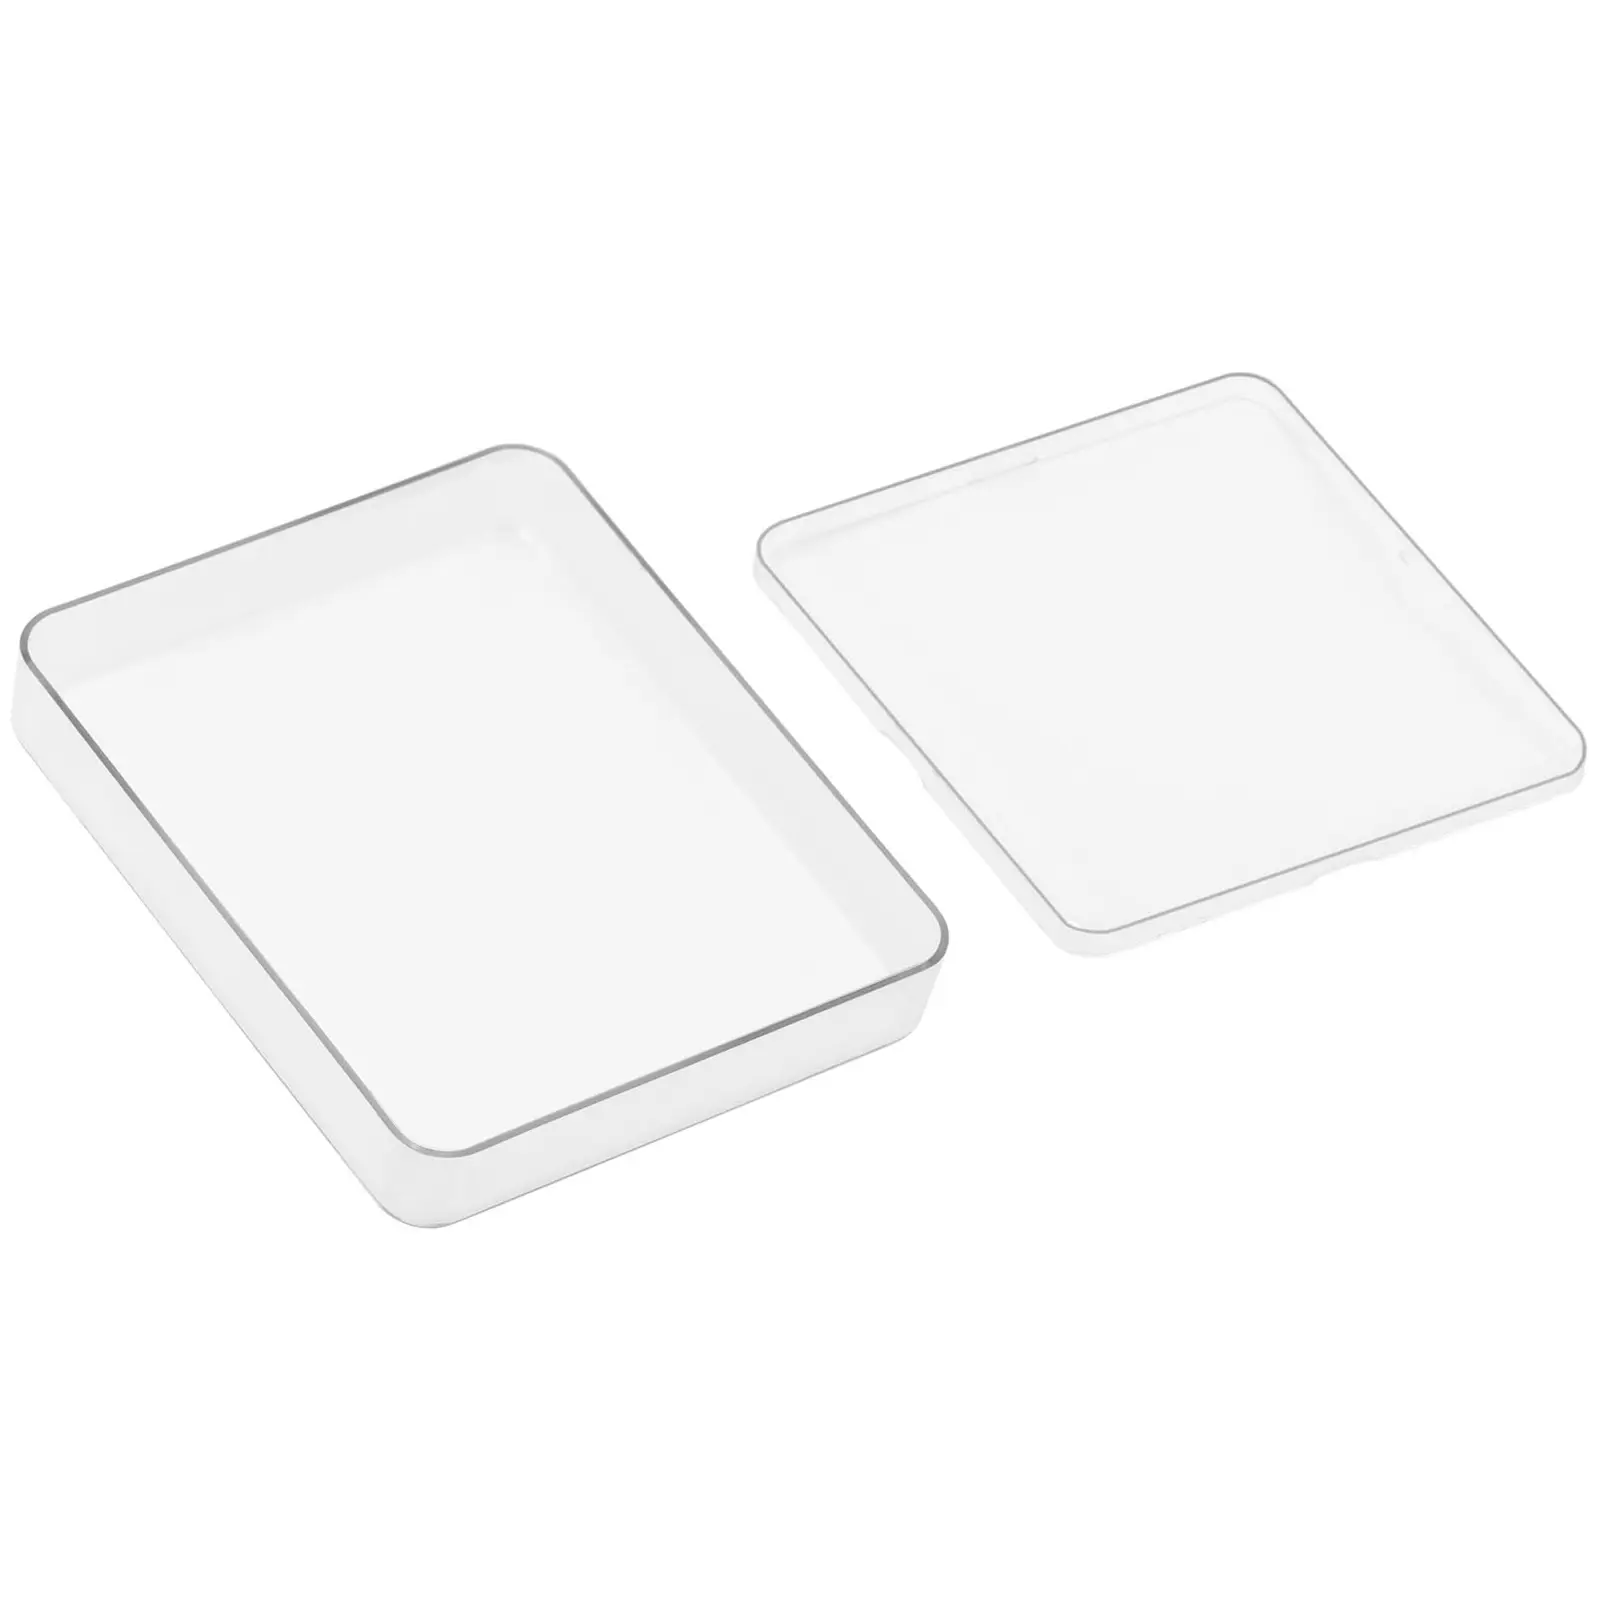 Digital bordsvåg - 500 g/ 0,01 g - 10 x 10 cm